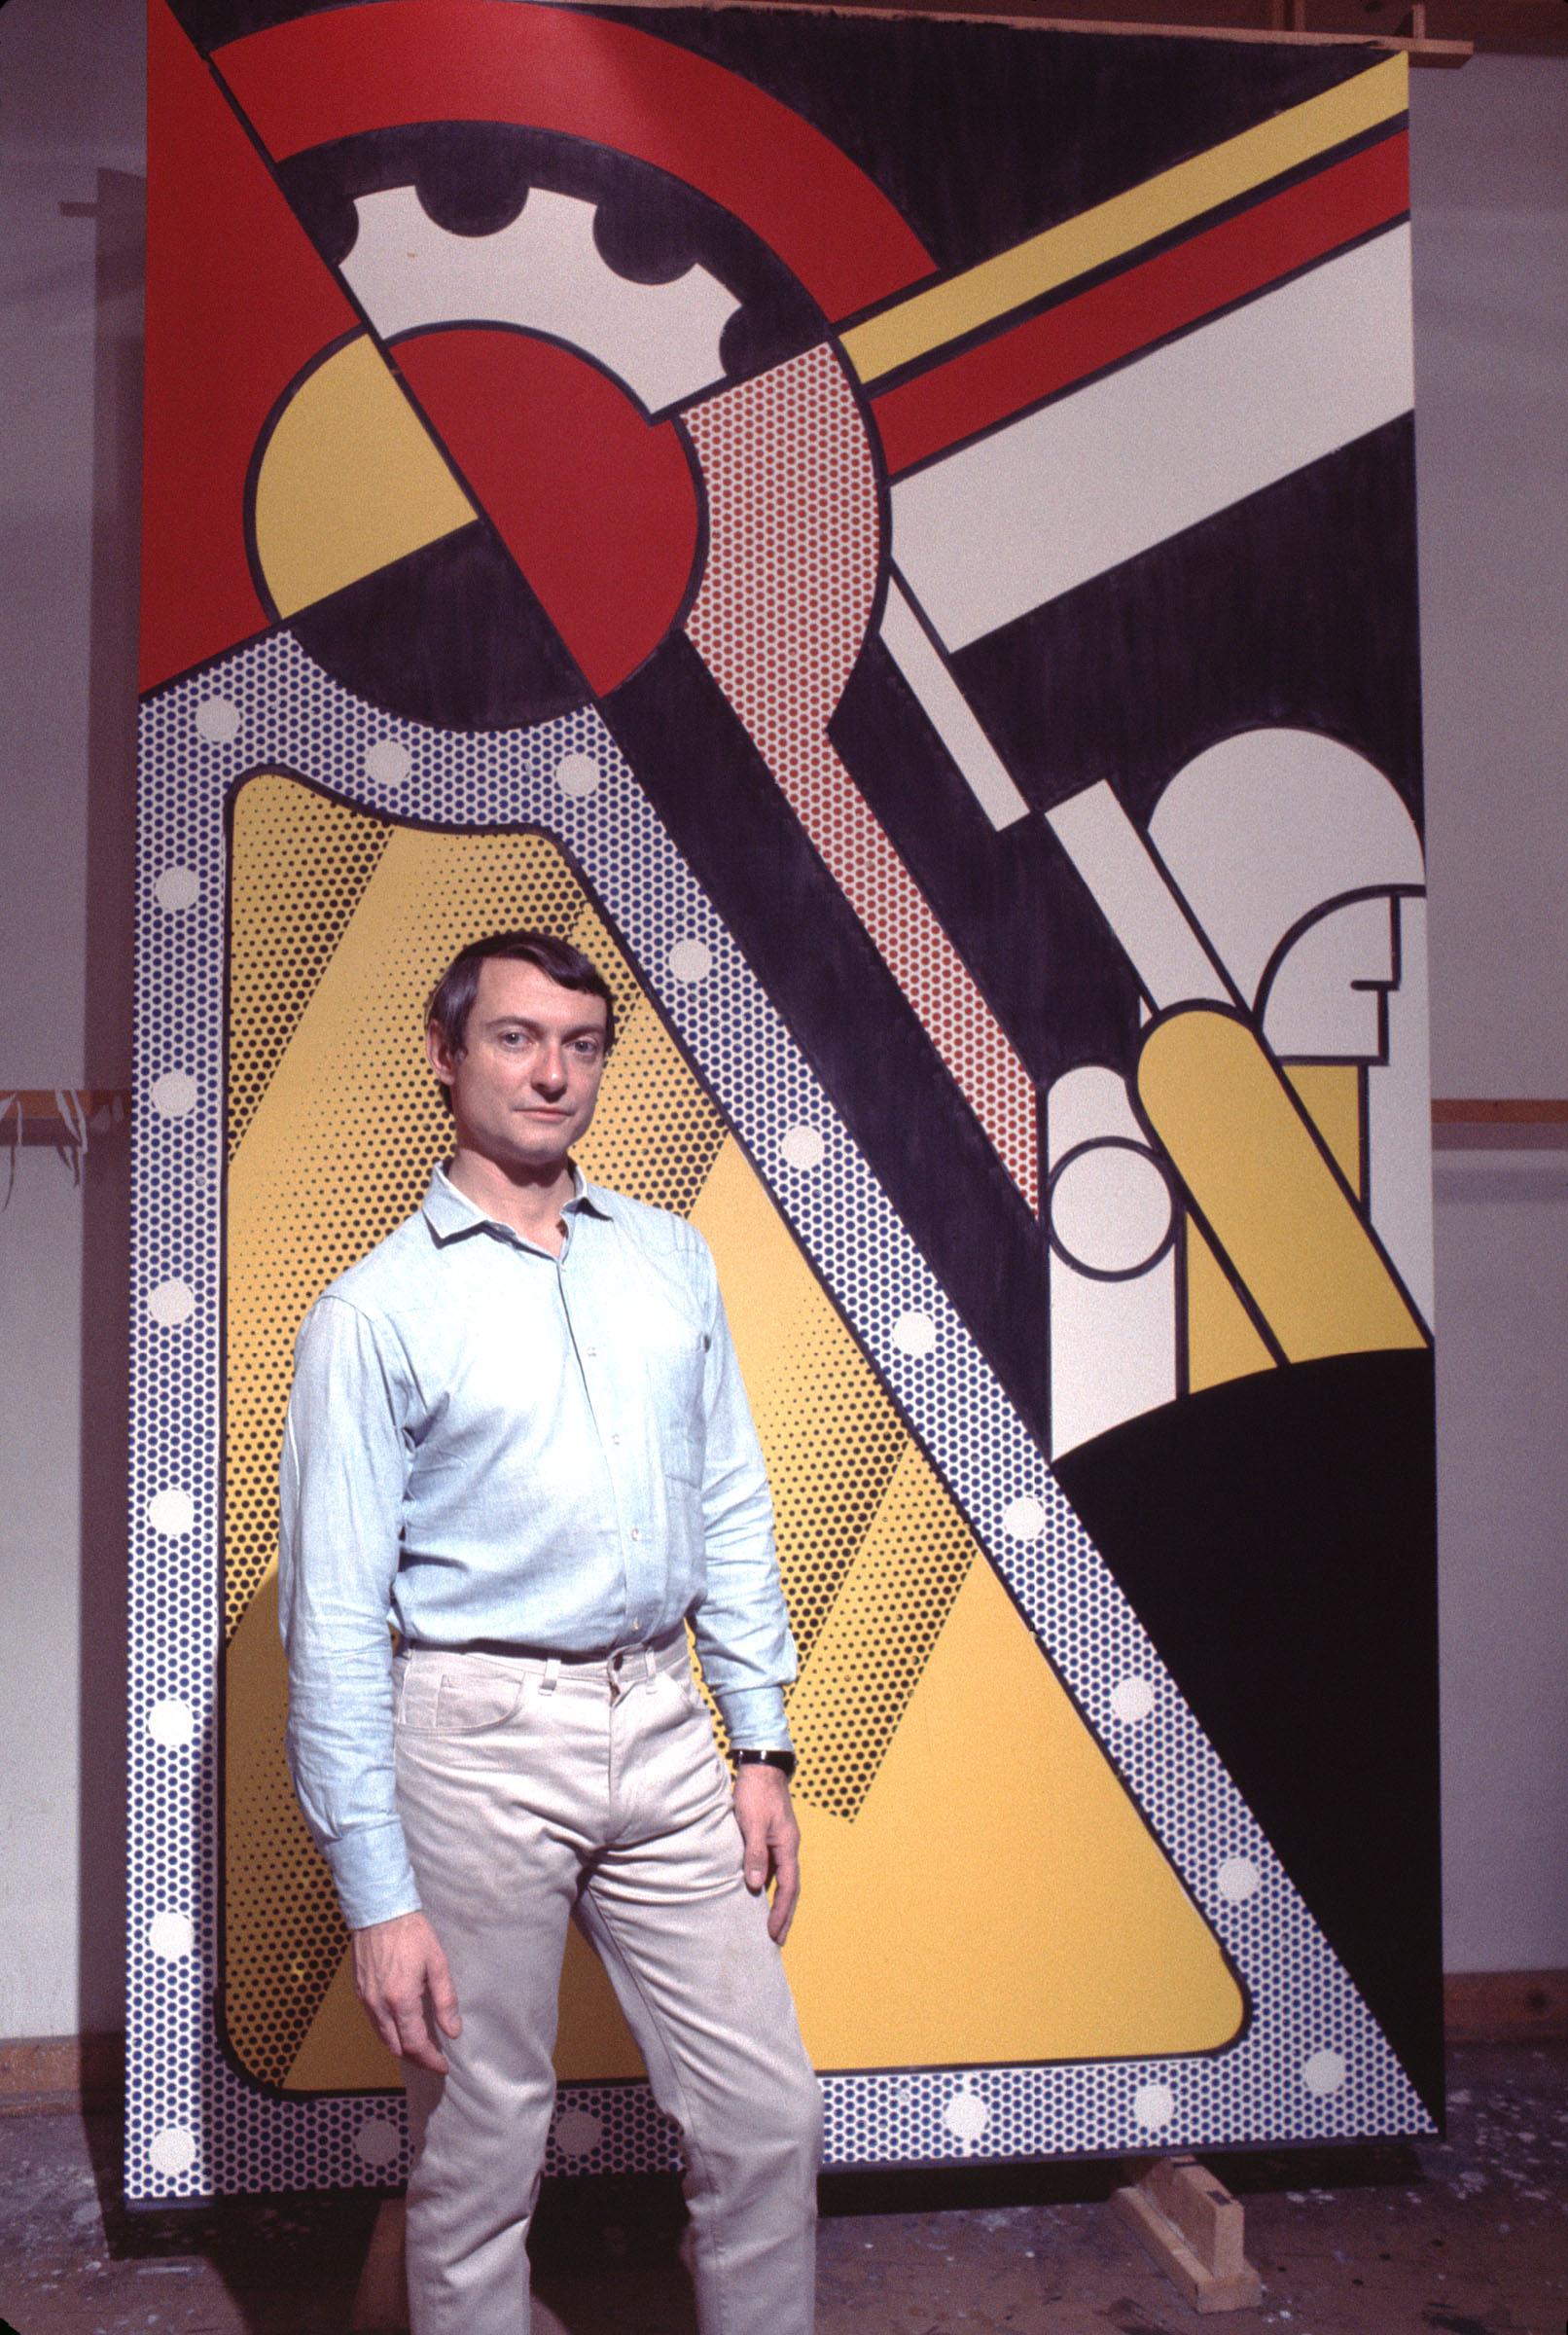 Jack Mitchell Color Photograph - Pop Artist Roy Lichtenstein in his Studio, Color 17 x 22" Exhibition Photograph